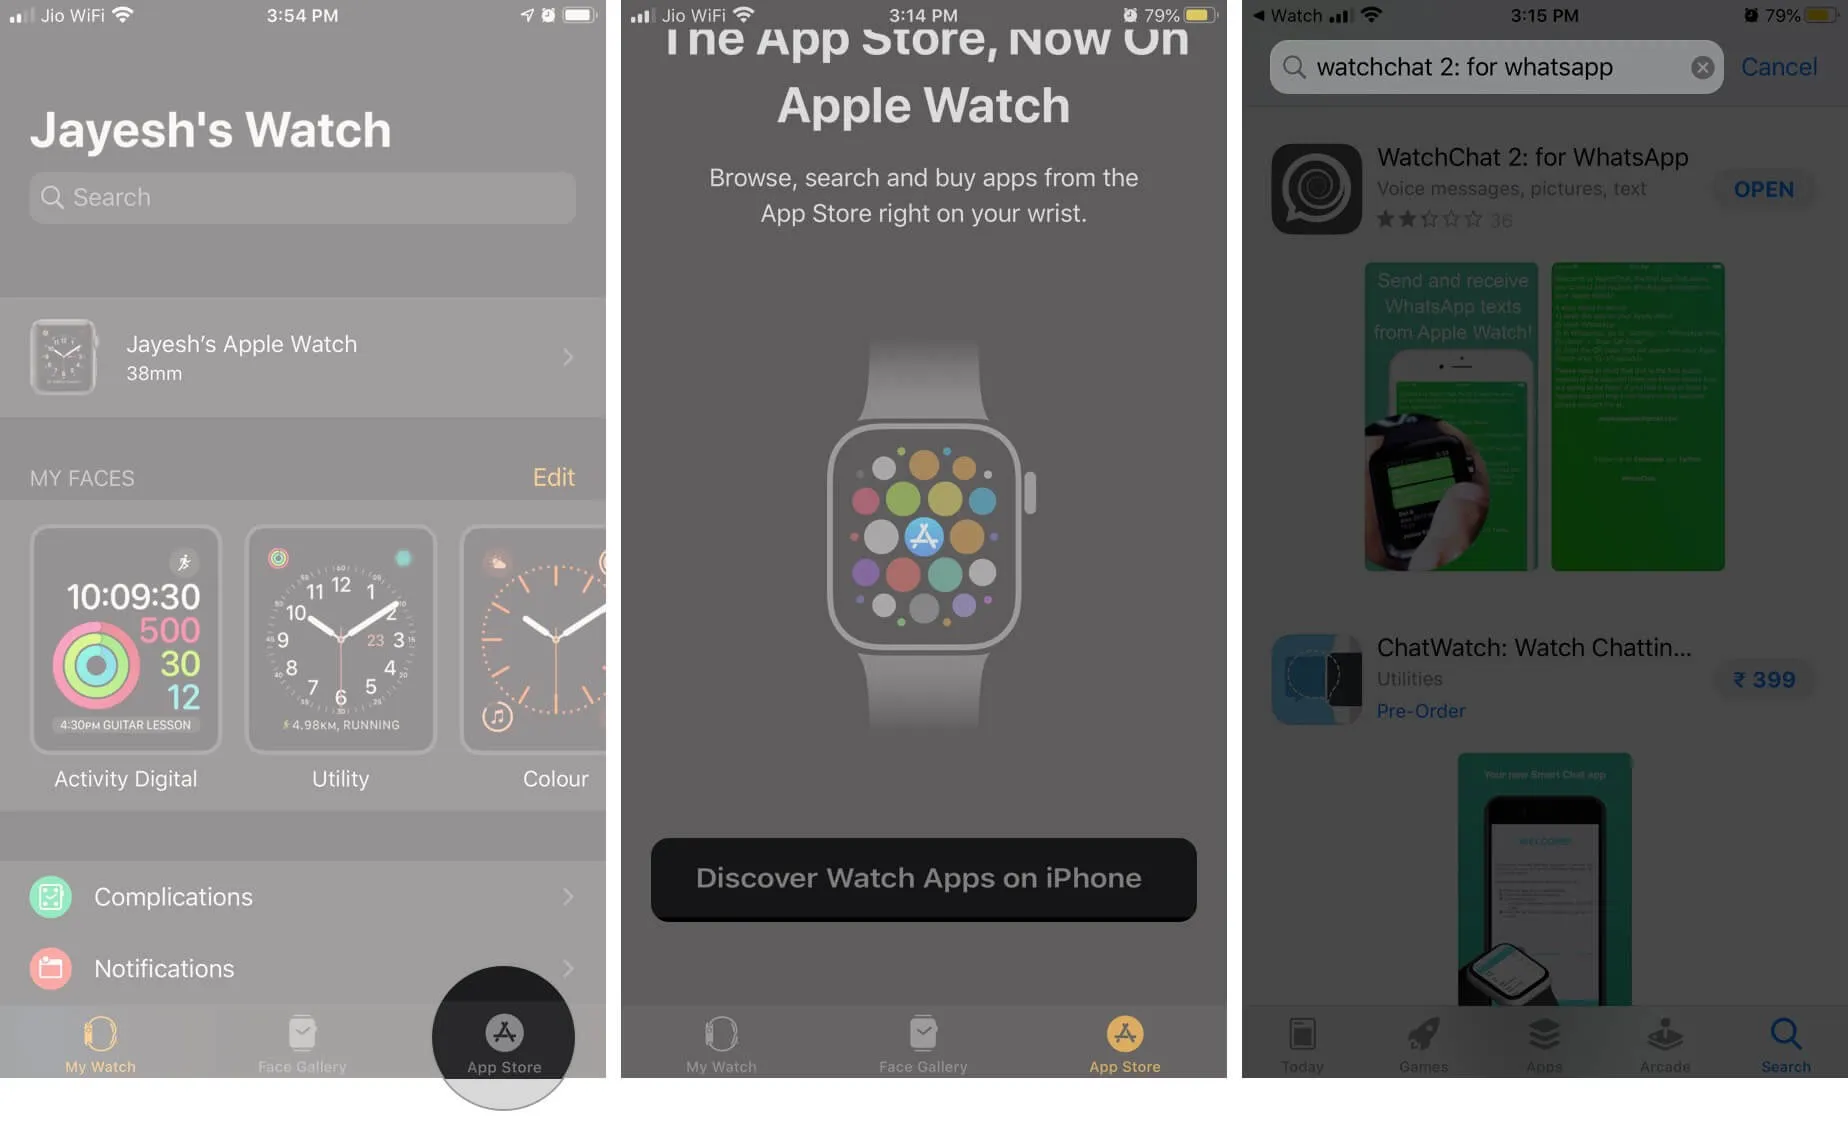 Watch App を開いて App Store を選択し、「iPhone で Watch App を探す」をタップして WatchChat 2 を検索します